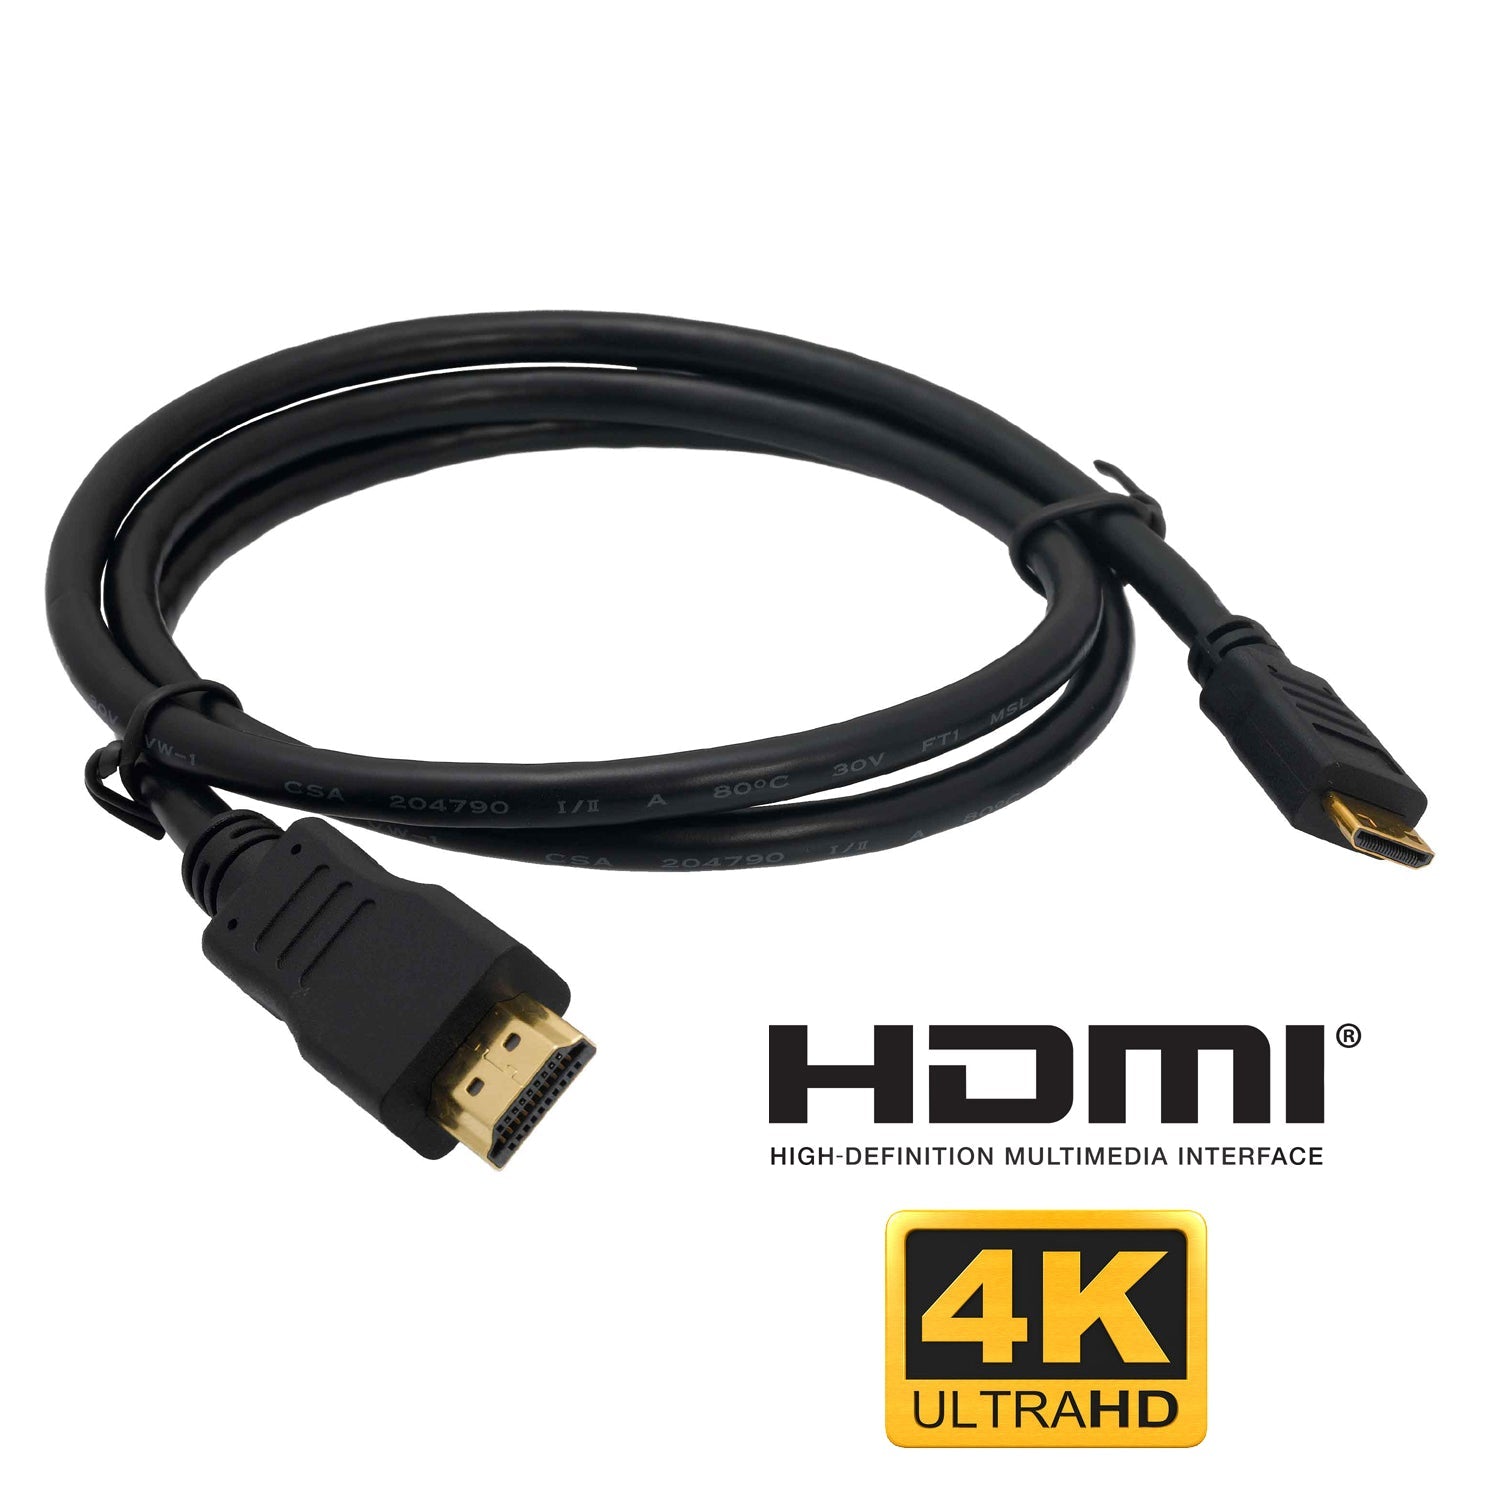 15m HDMI 4K UHD Audio Video Cable - Karaoke Home Entertainment